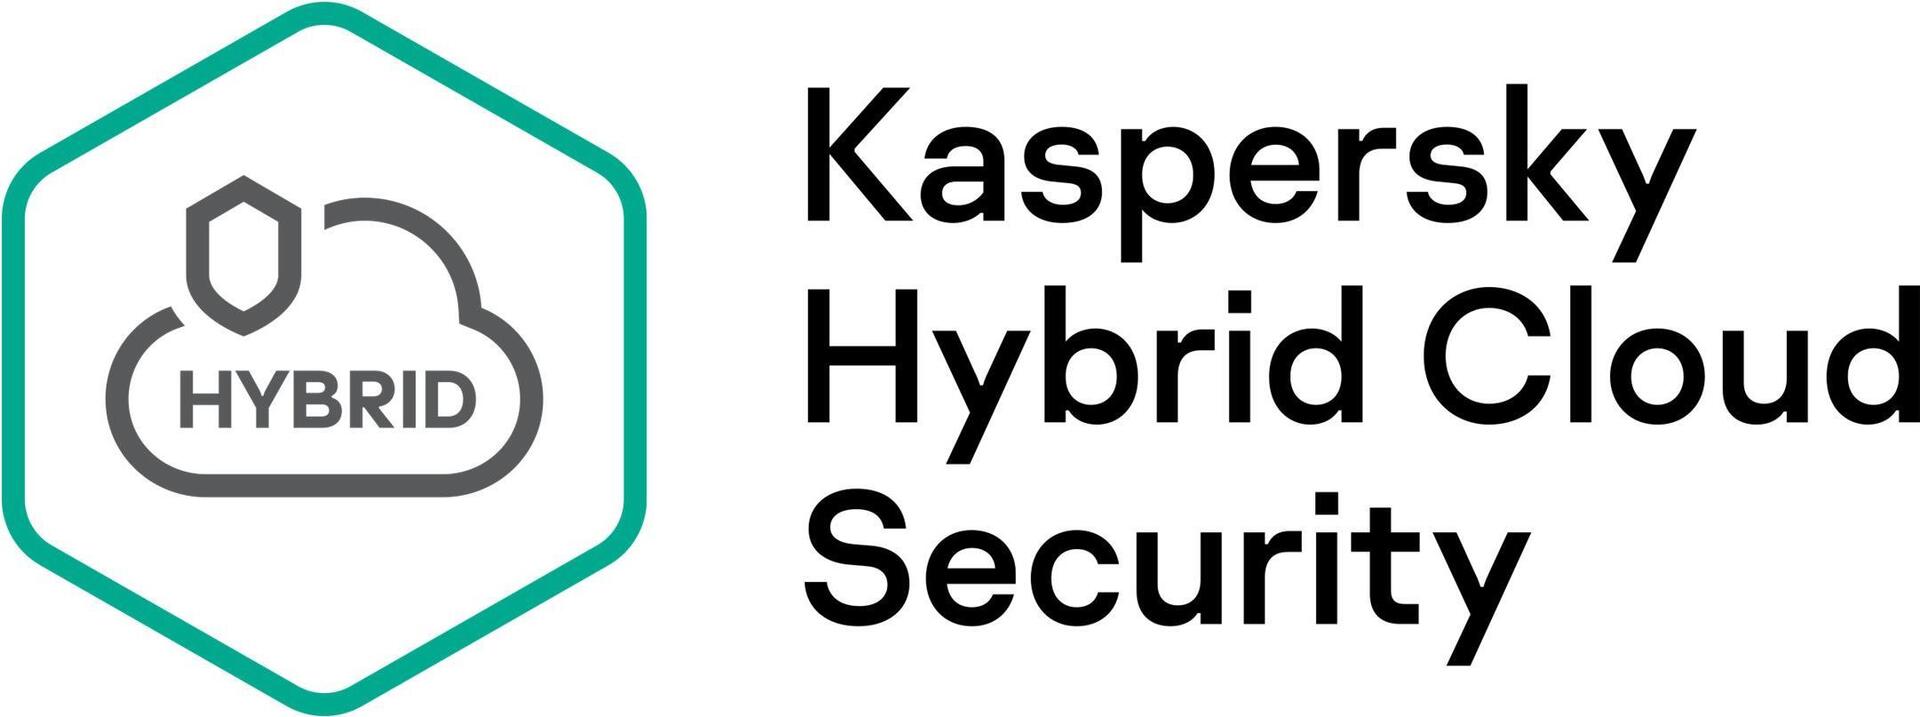 Kaspersky Hybrid Cloud Security (KL4554XARD9)